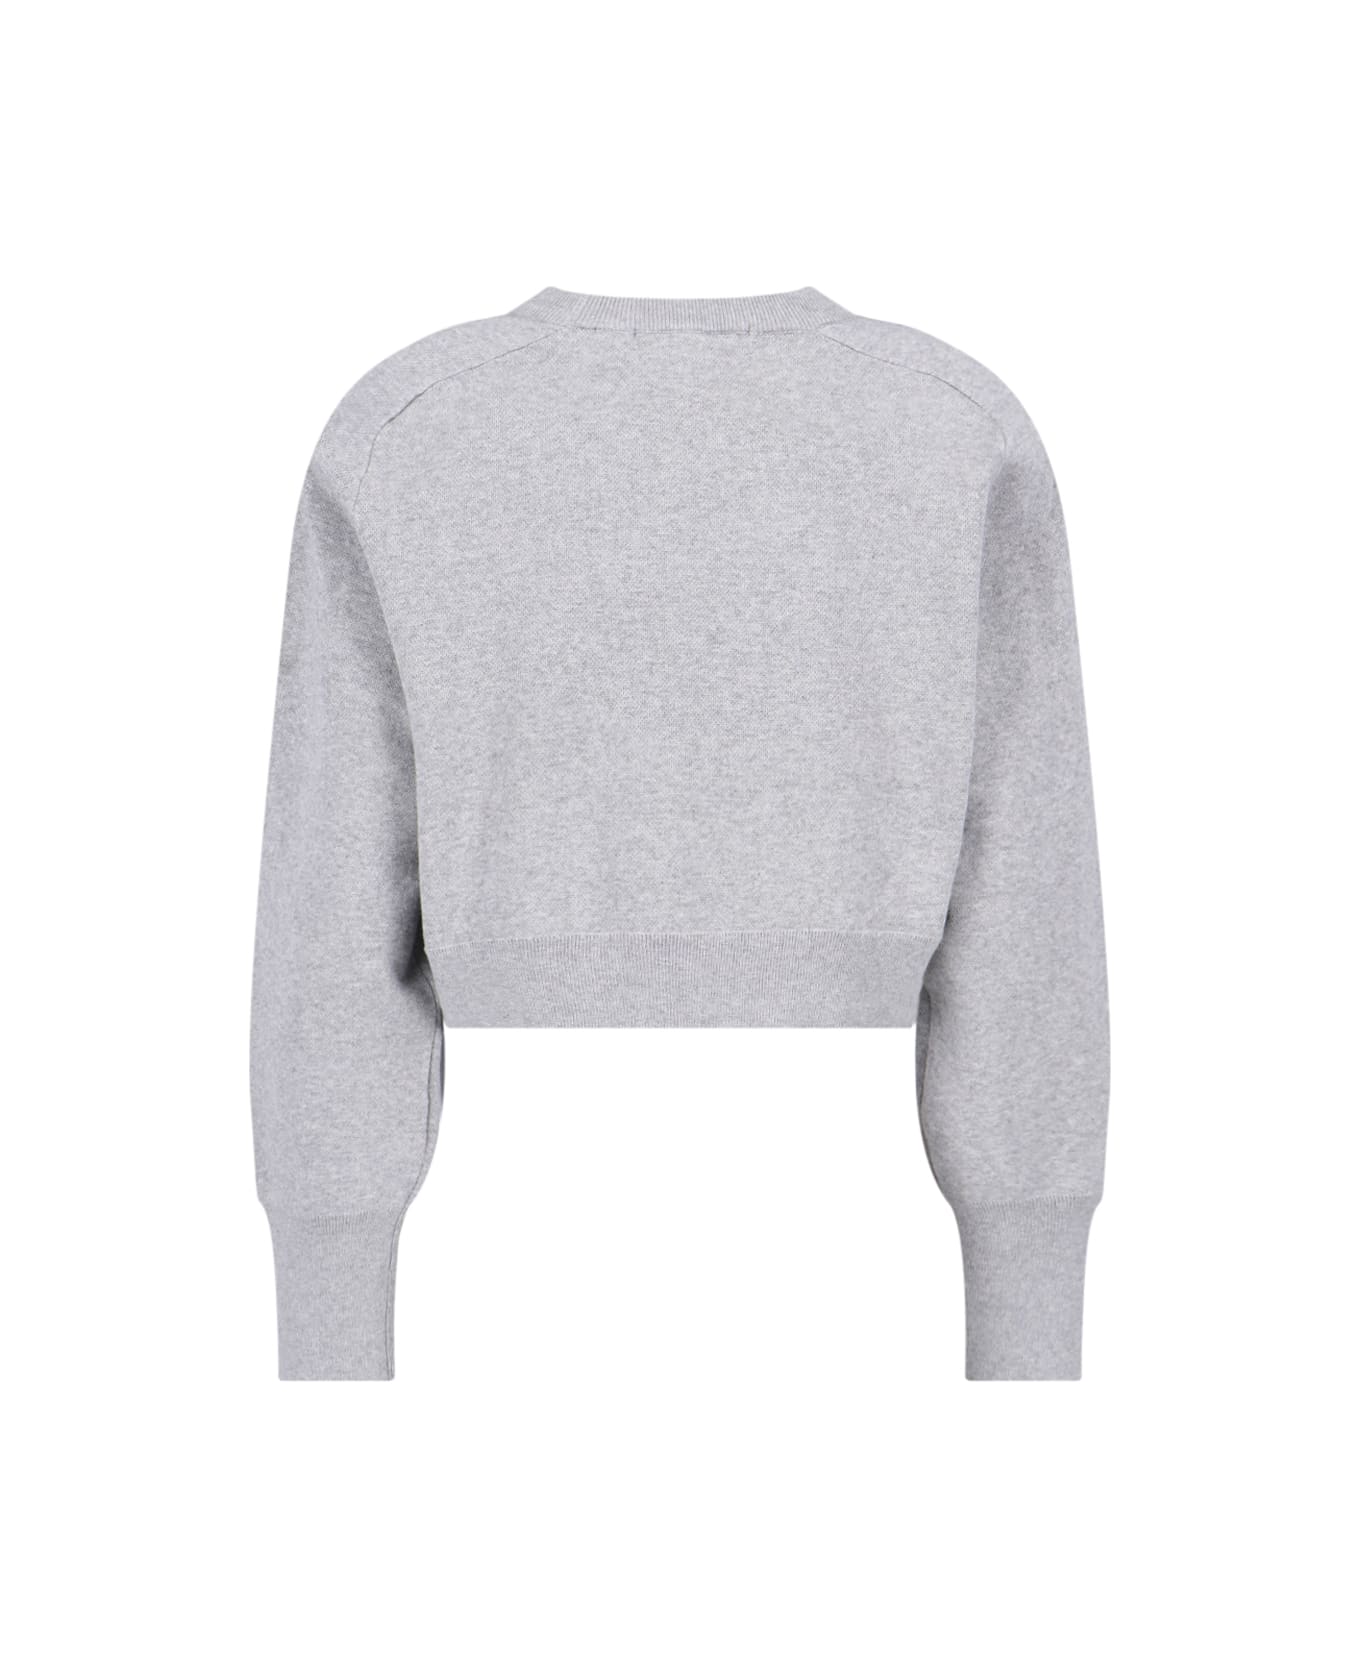 Rotate by Birger Christensen Logo Cropped Sweatshirt - Gray